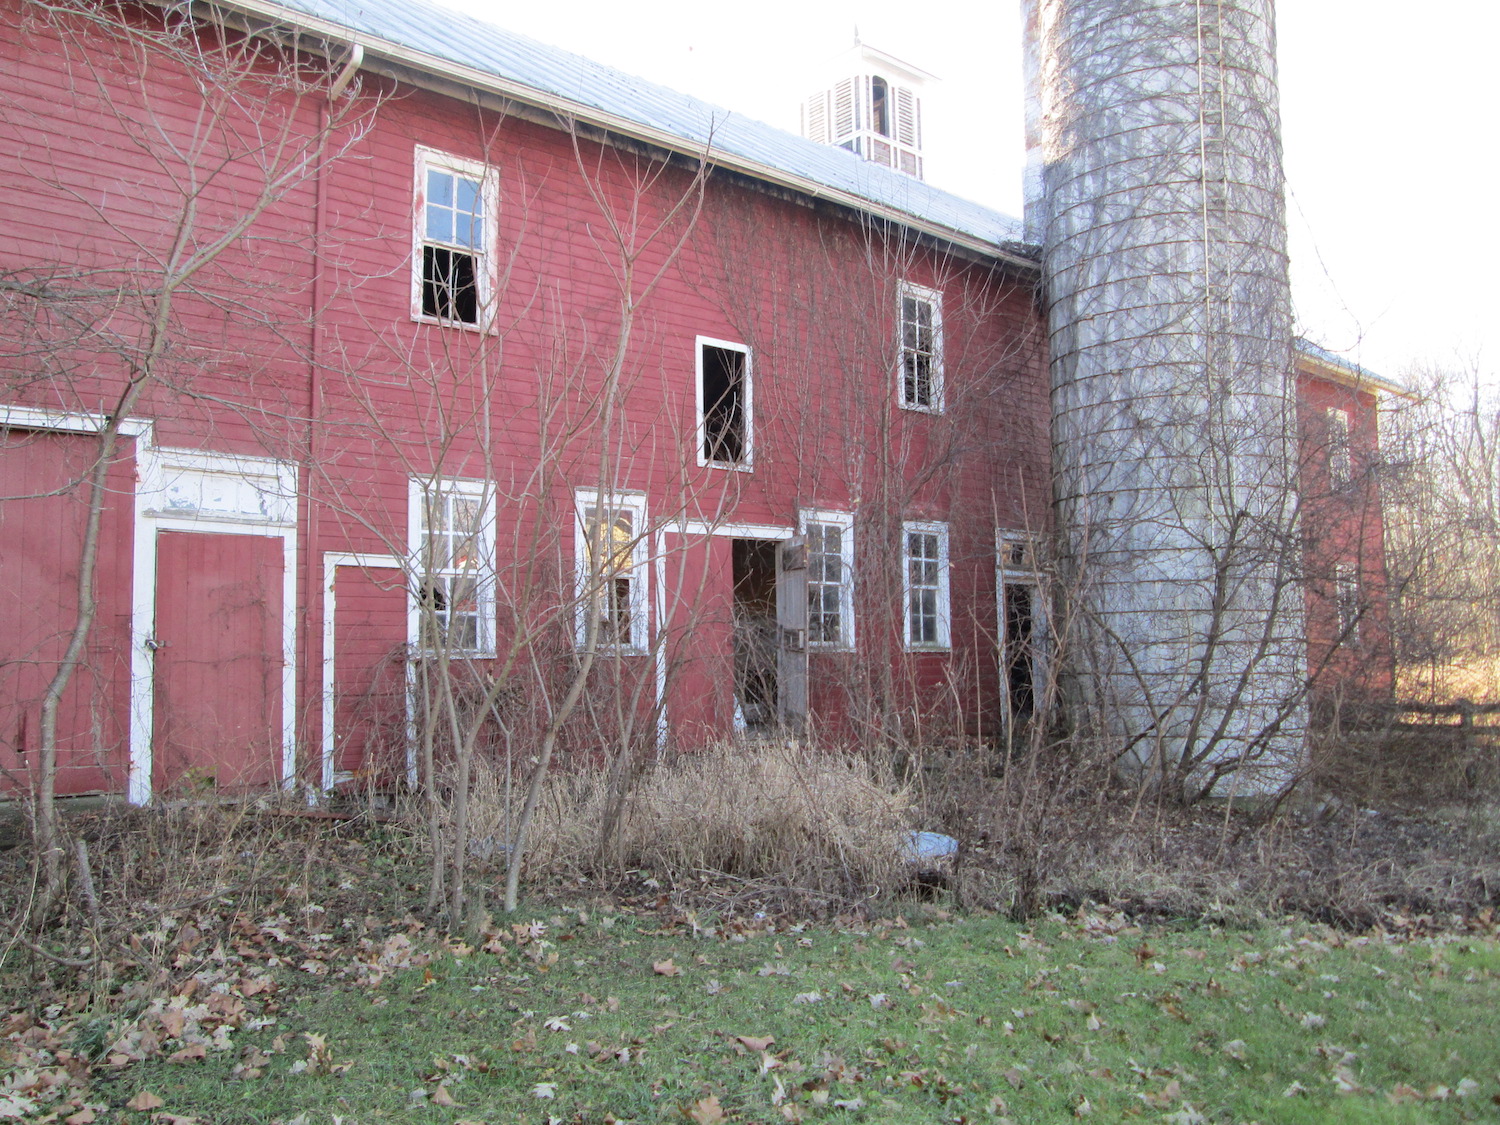 An old horse barn in Jackson, Michigan